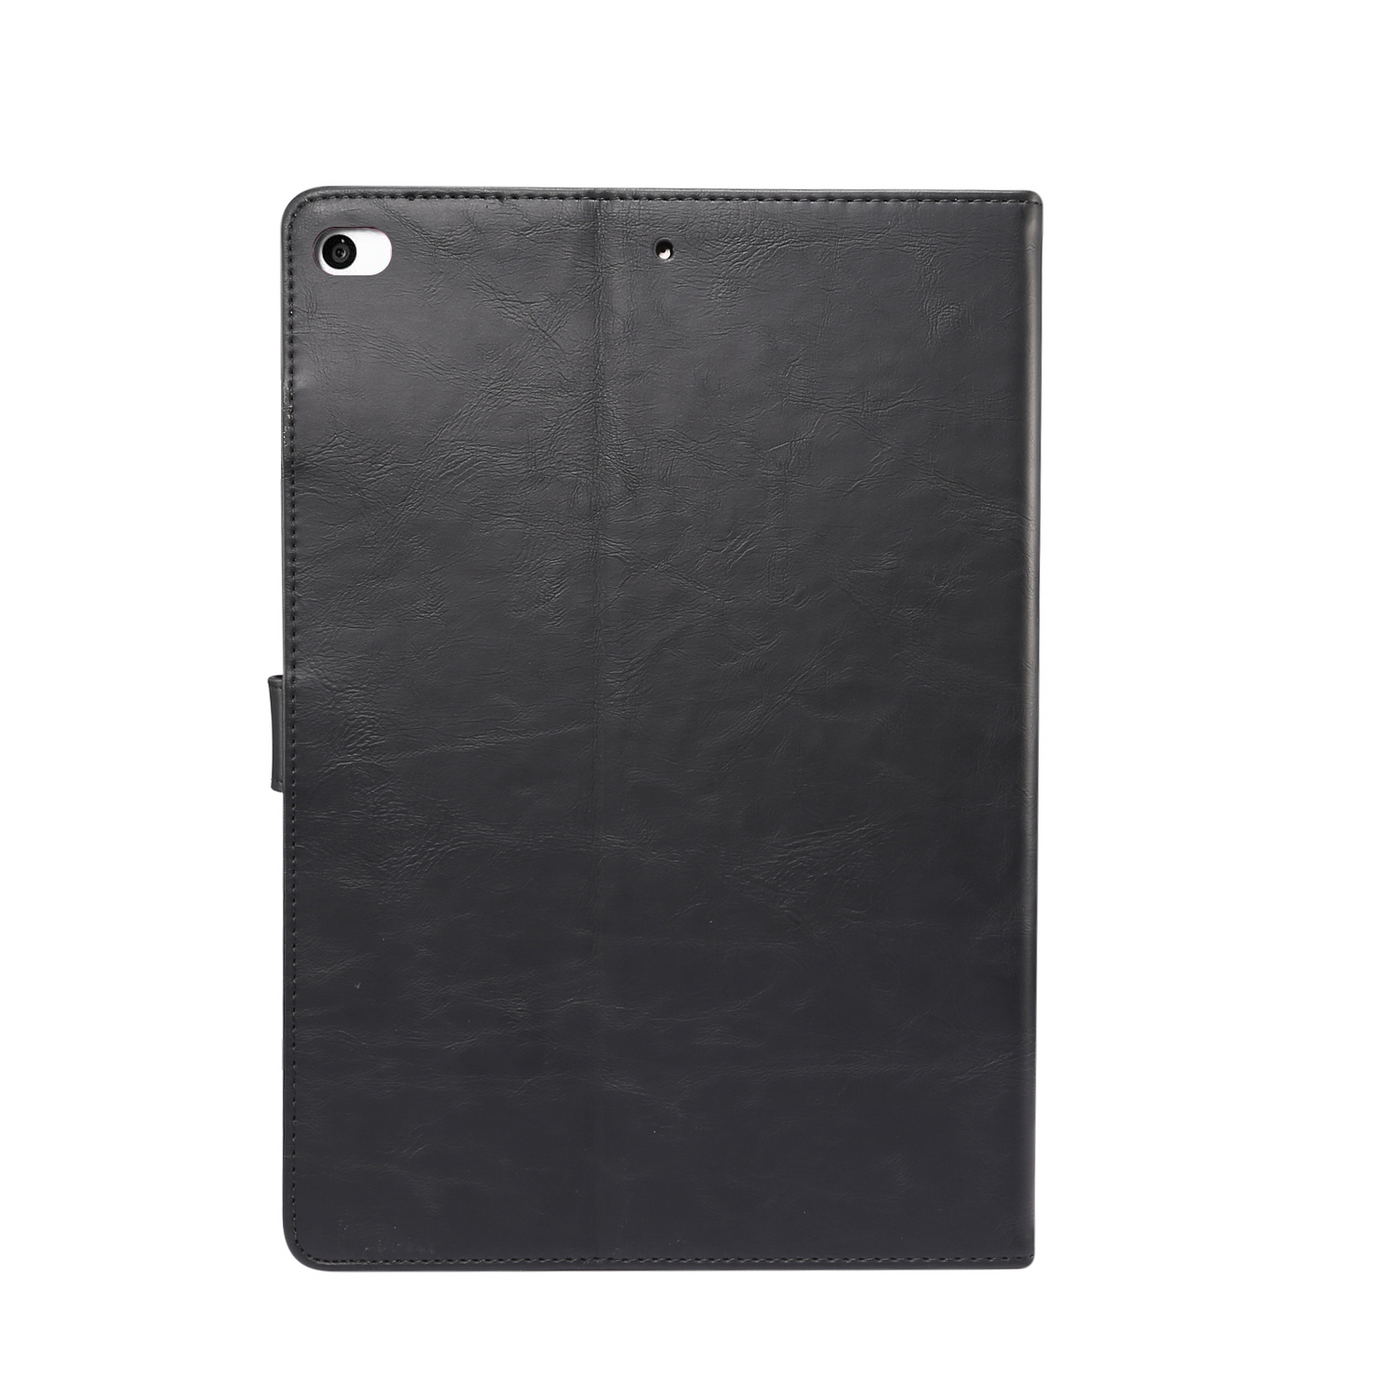 Excelsior Premium Leather Flip Cover Case For Apple iPad Mini 7.9 inch (5th Gen)